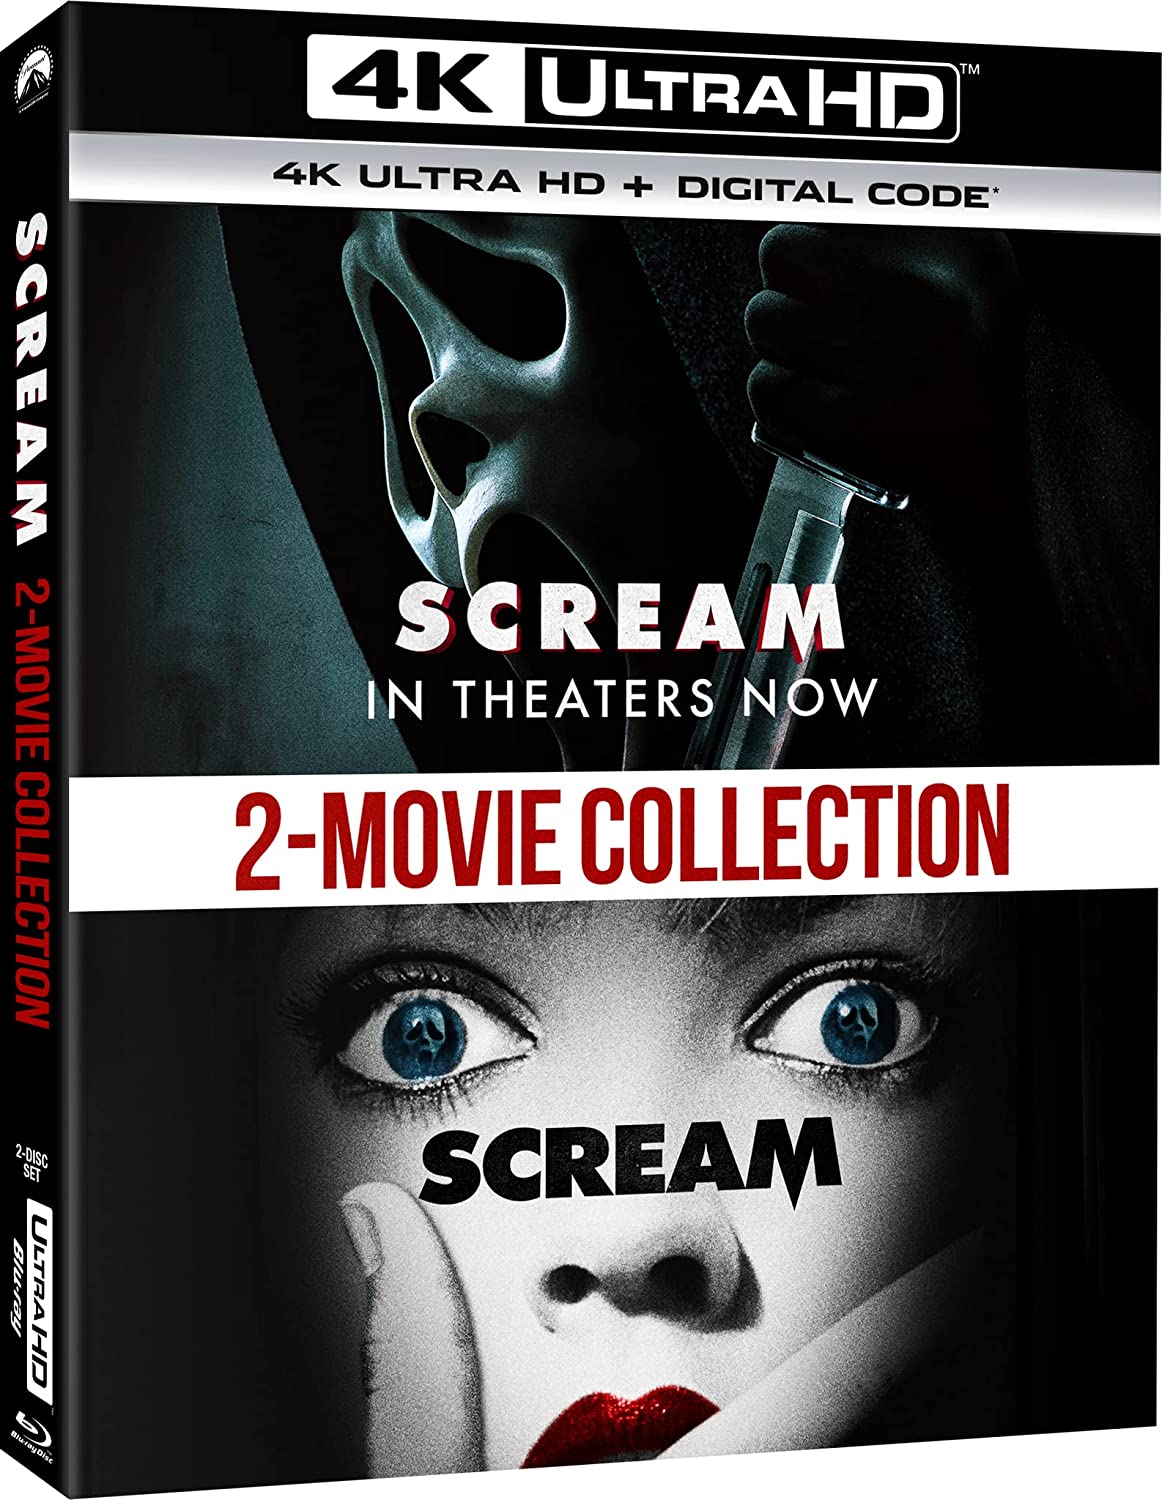 Scream 2-Movie Collection 4k Blu-ray